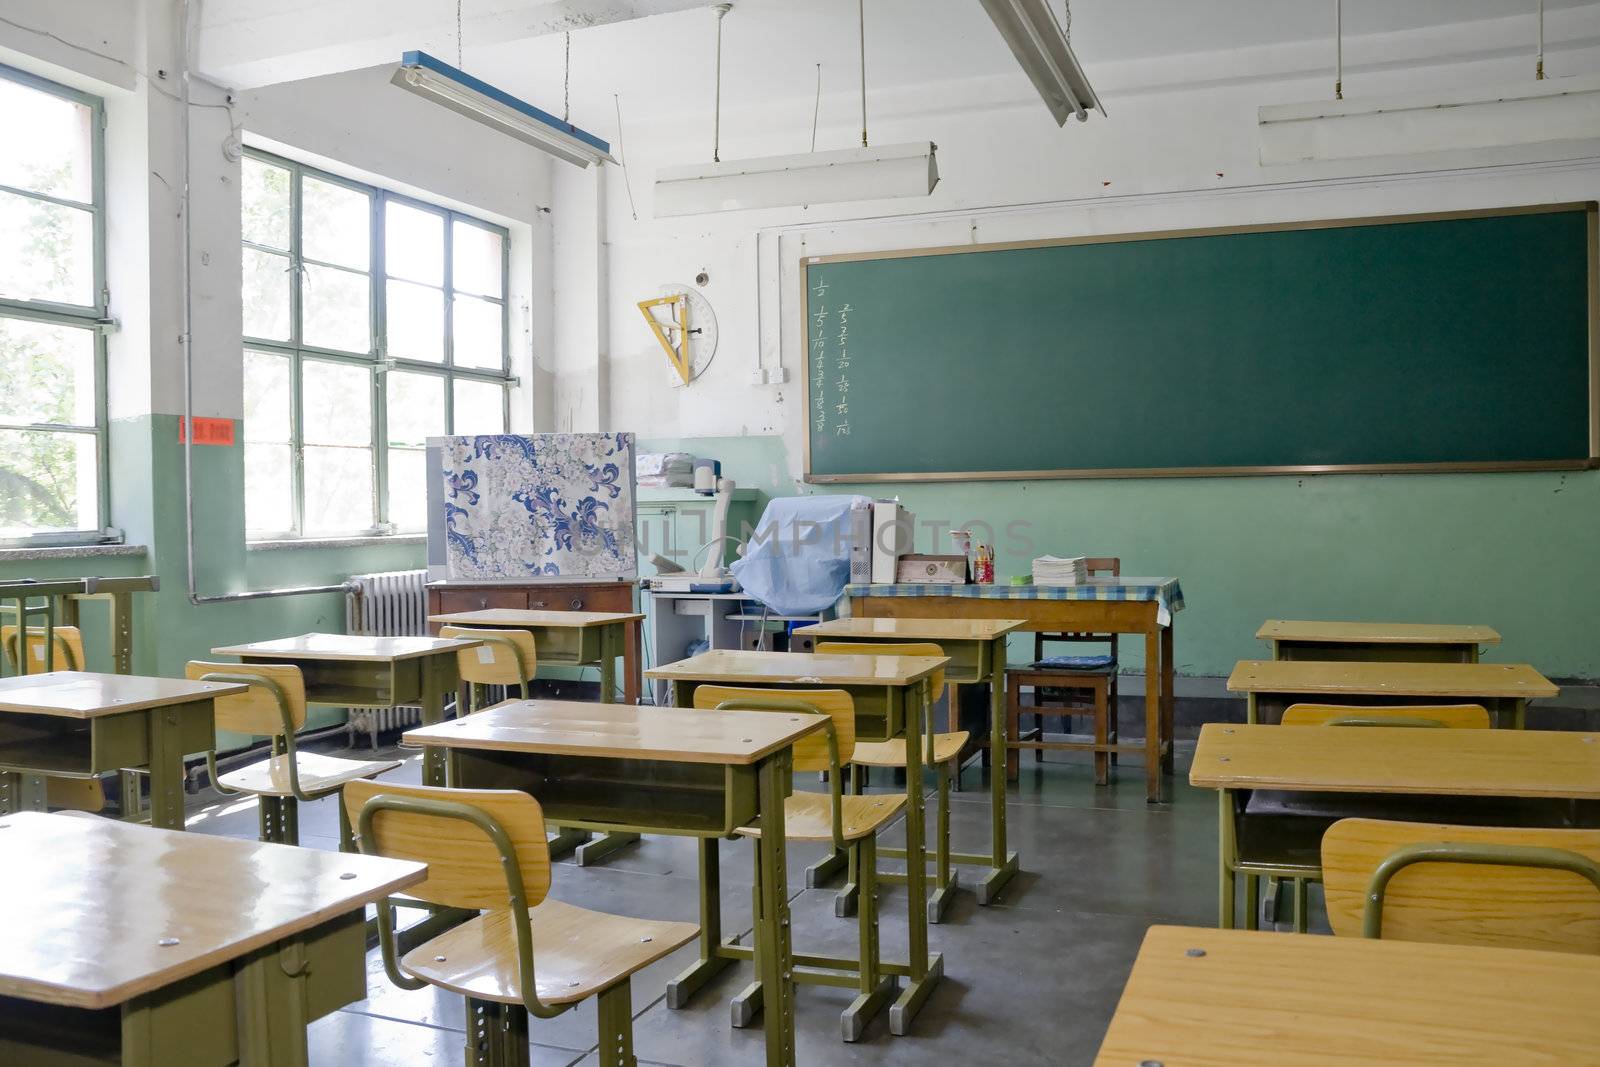 Elementary school classroom by yuyang